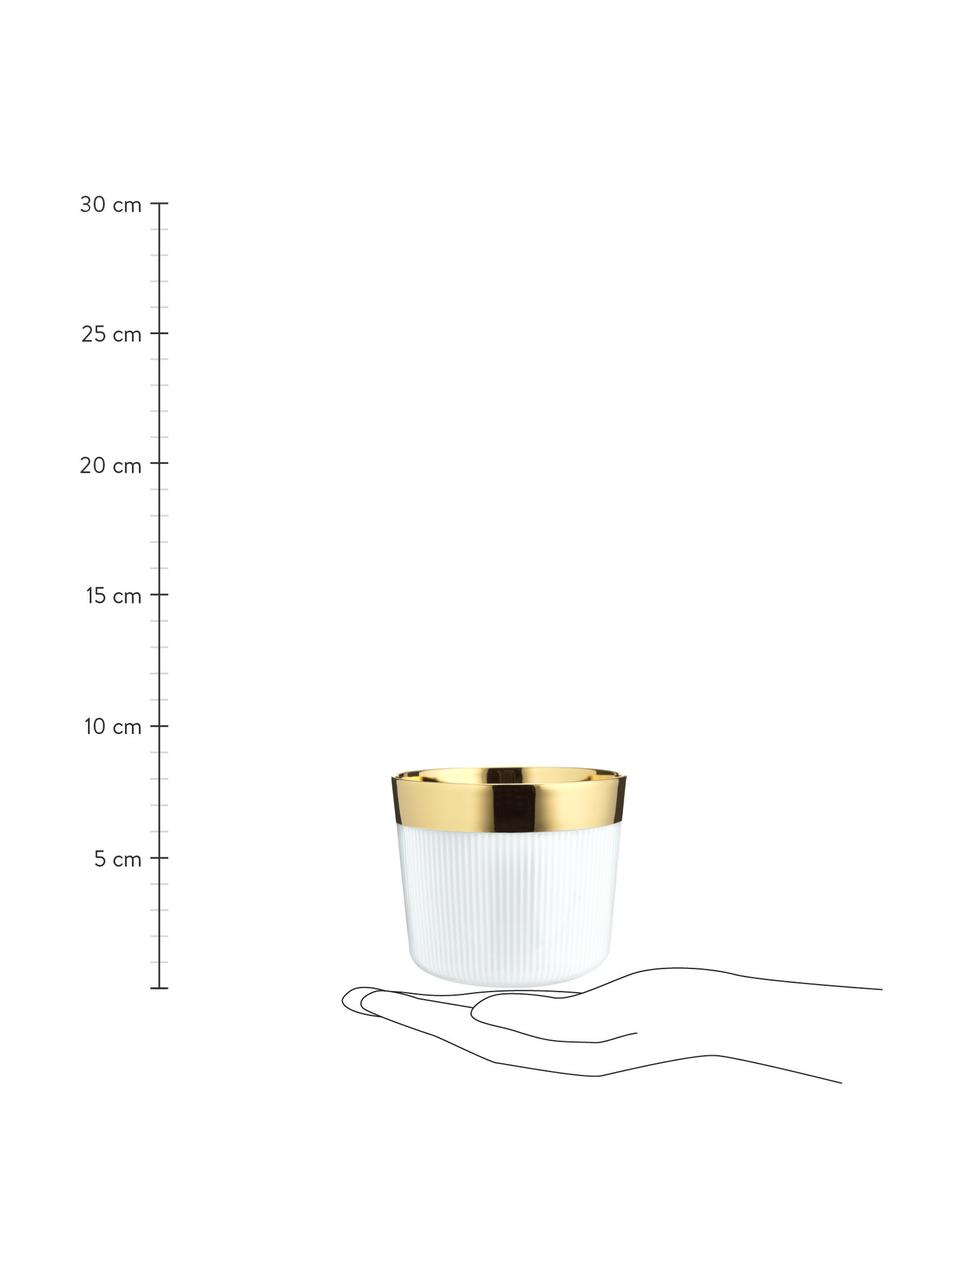 Copa de champán de porcelana Sip of Gold, Borde: porcelana, dorado, Blanco, dorado, Ø 9 x Al 7 cm, 300 ml